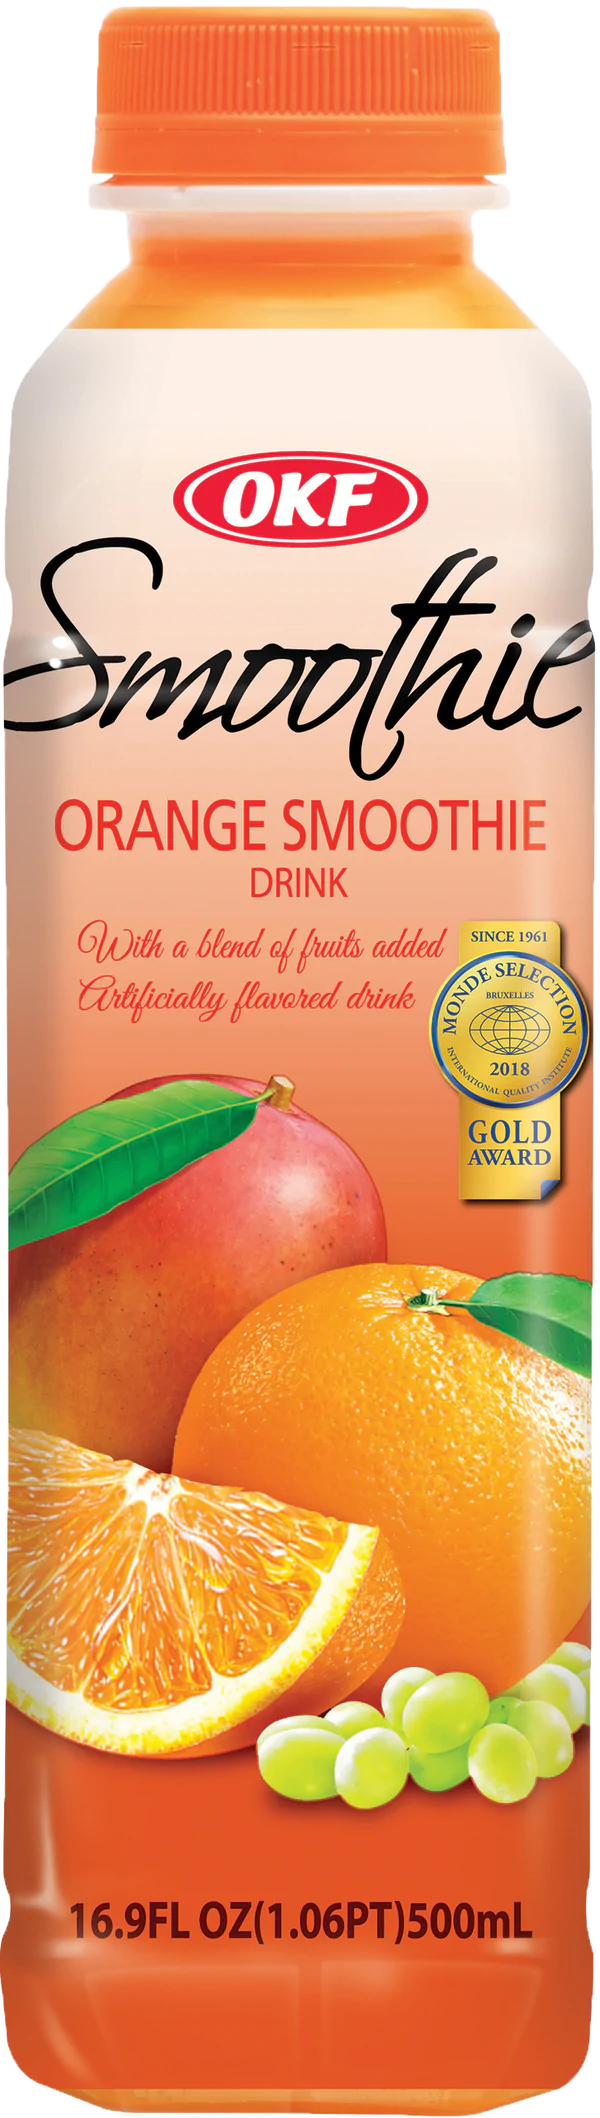 OKF Orange Smoothie Drink 500 ml Snaxies Exotic Drinks Montreal Canada